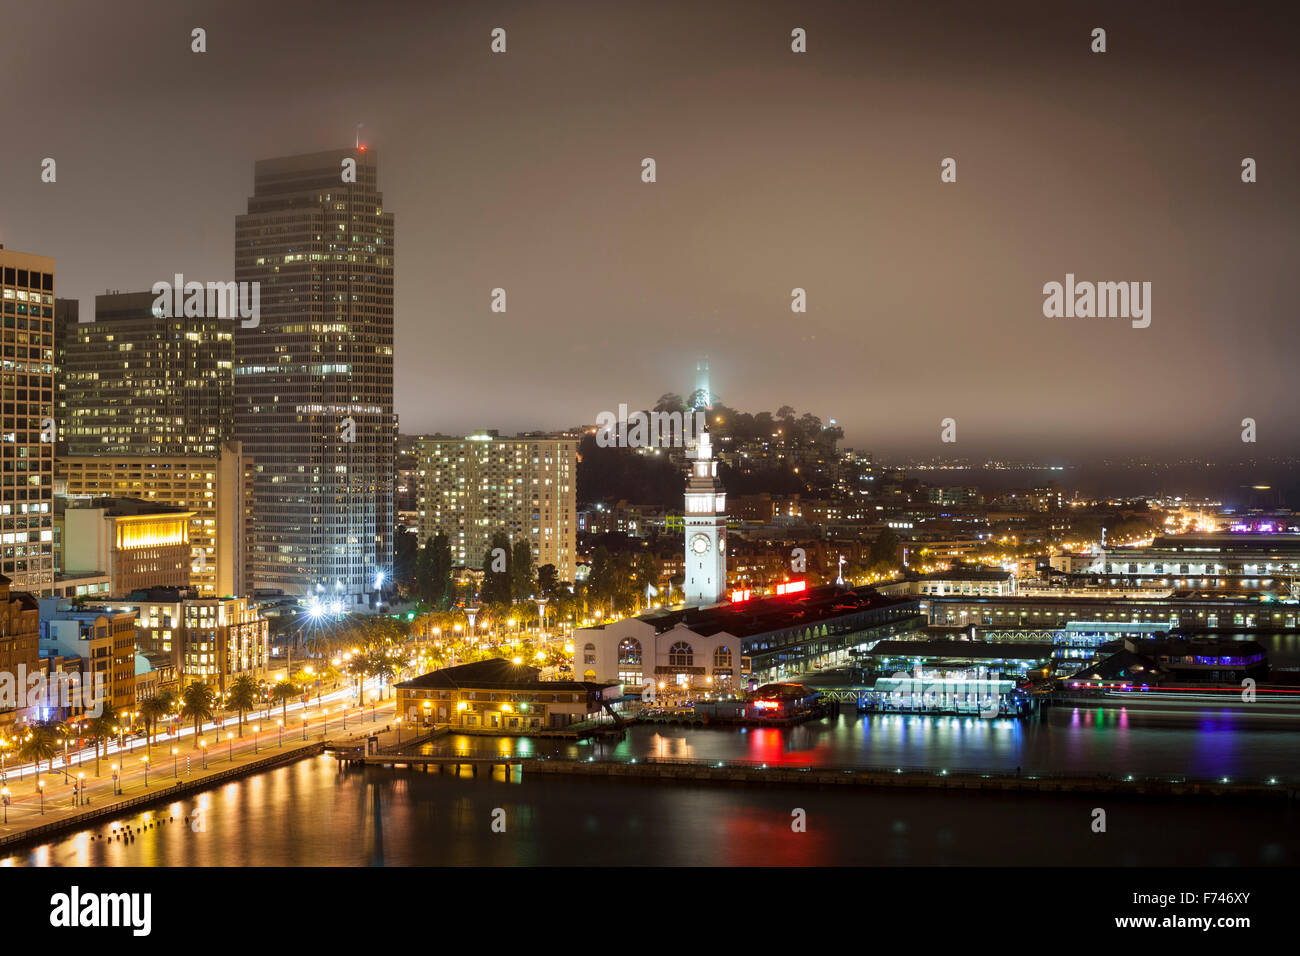 San Francisco Bay Area waterfront lit at night, California, USA Stock Photo